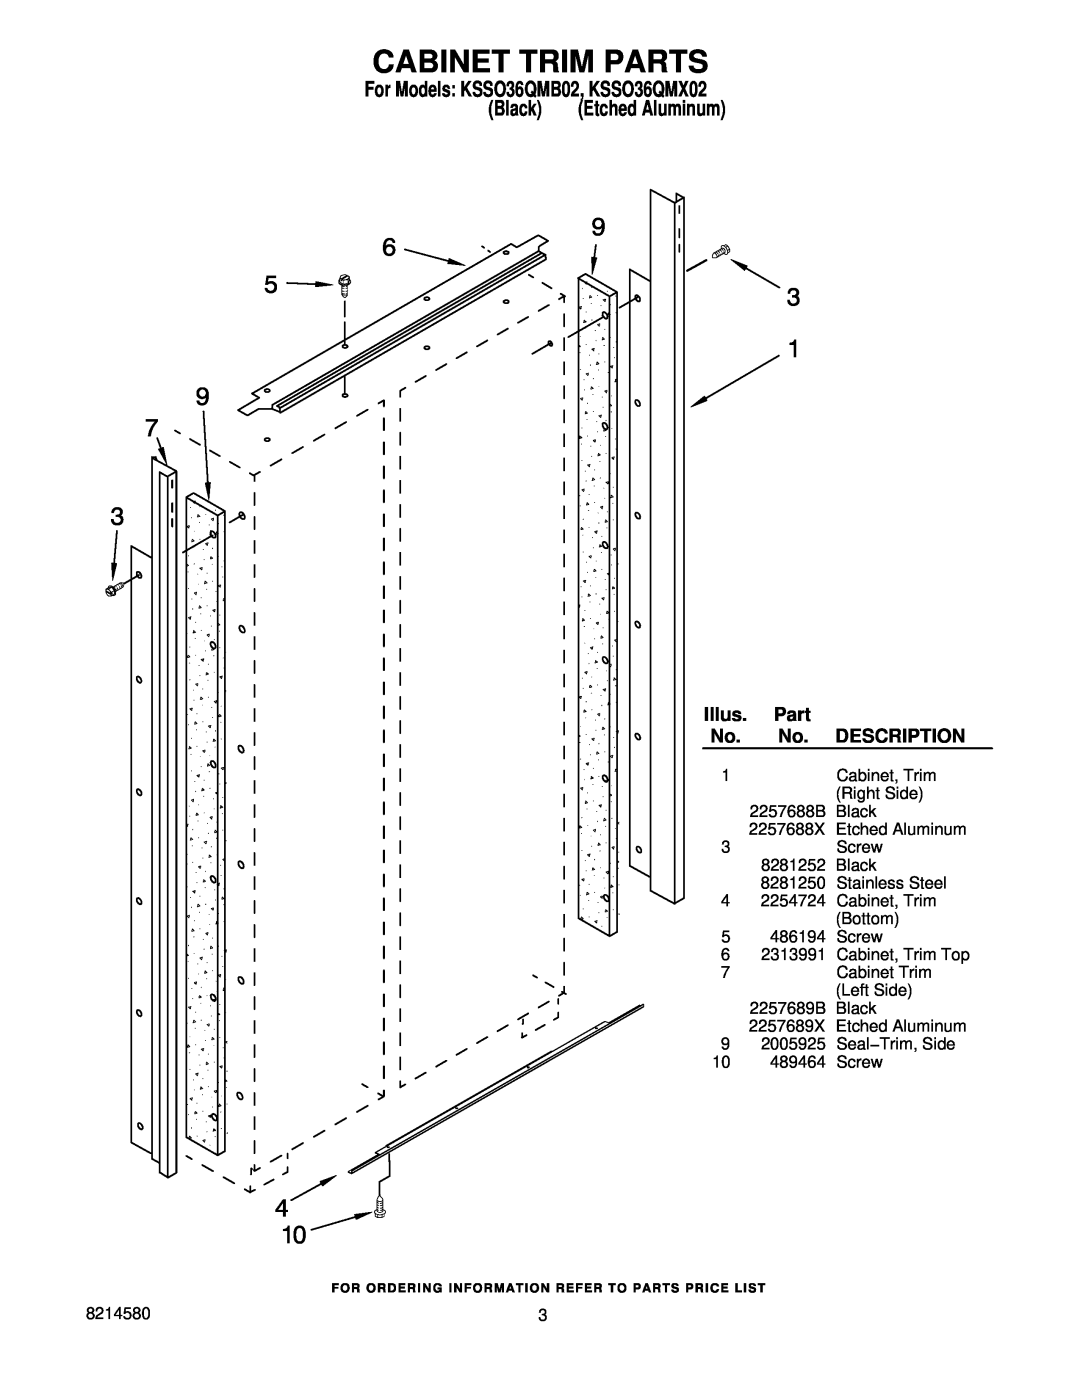 KitchenAid manual Cabinet Trim Parts, For Models KSSO36QMB02, KSSO36QMX02, Black, Illus, Description 